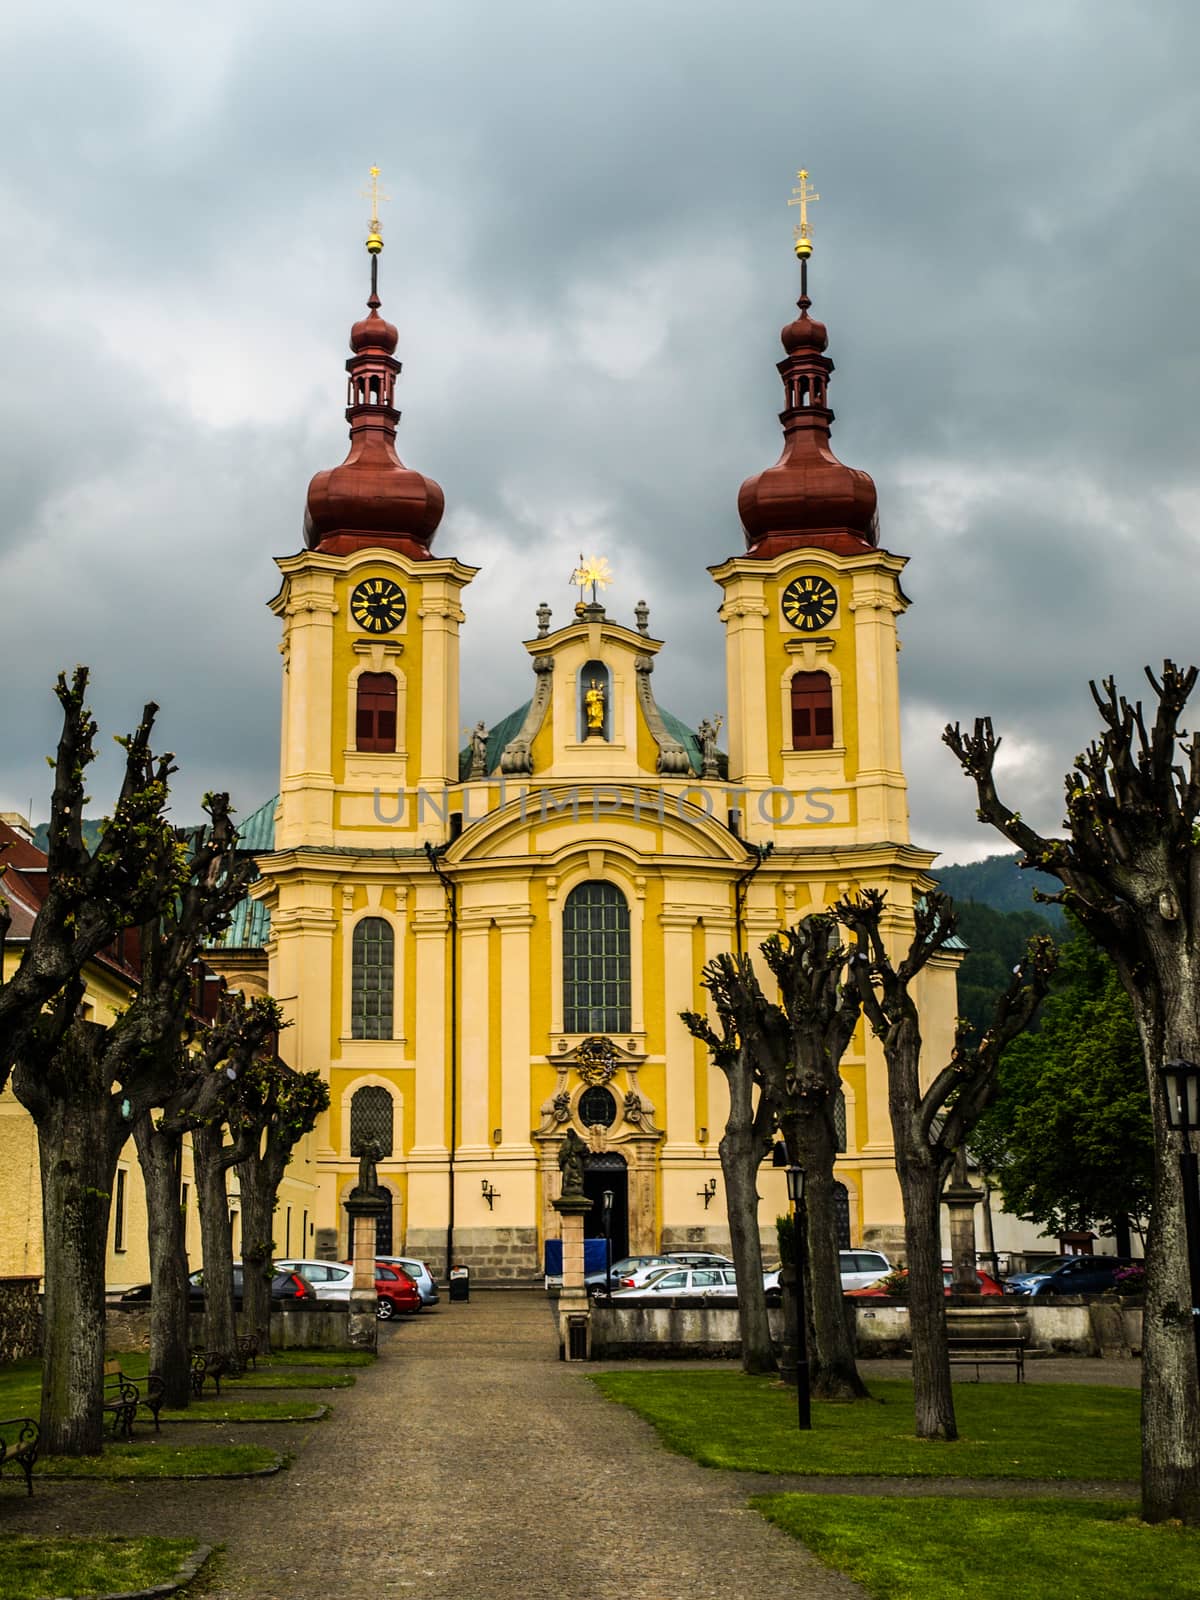 Baroque church in Hejnice (Czech Republic)